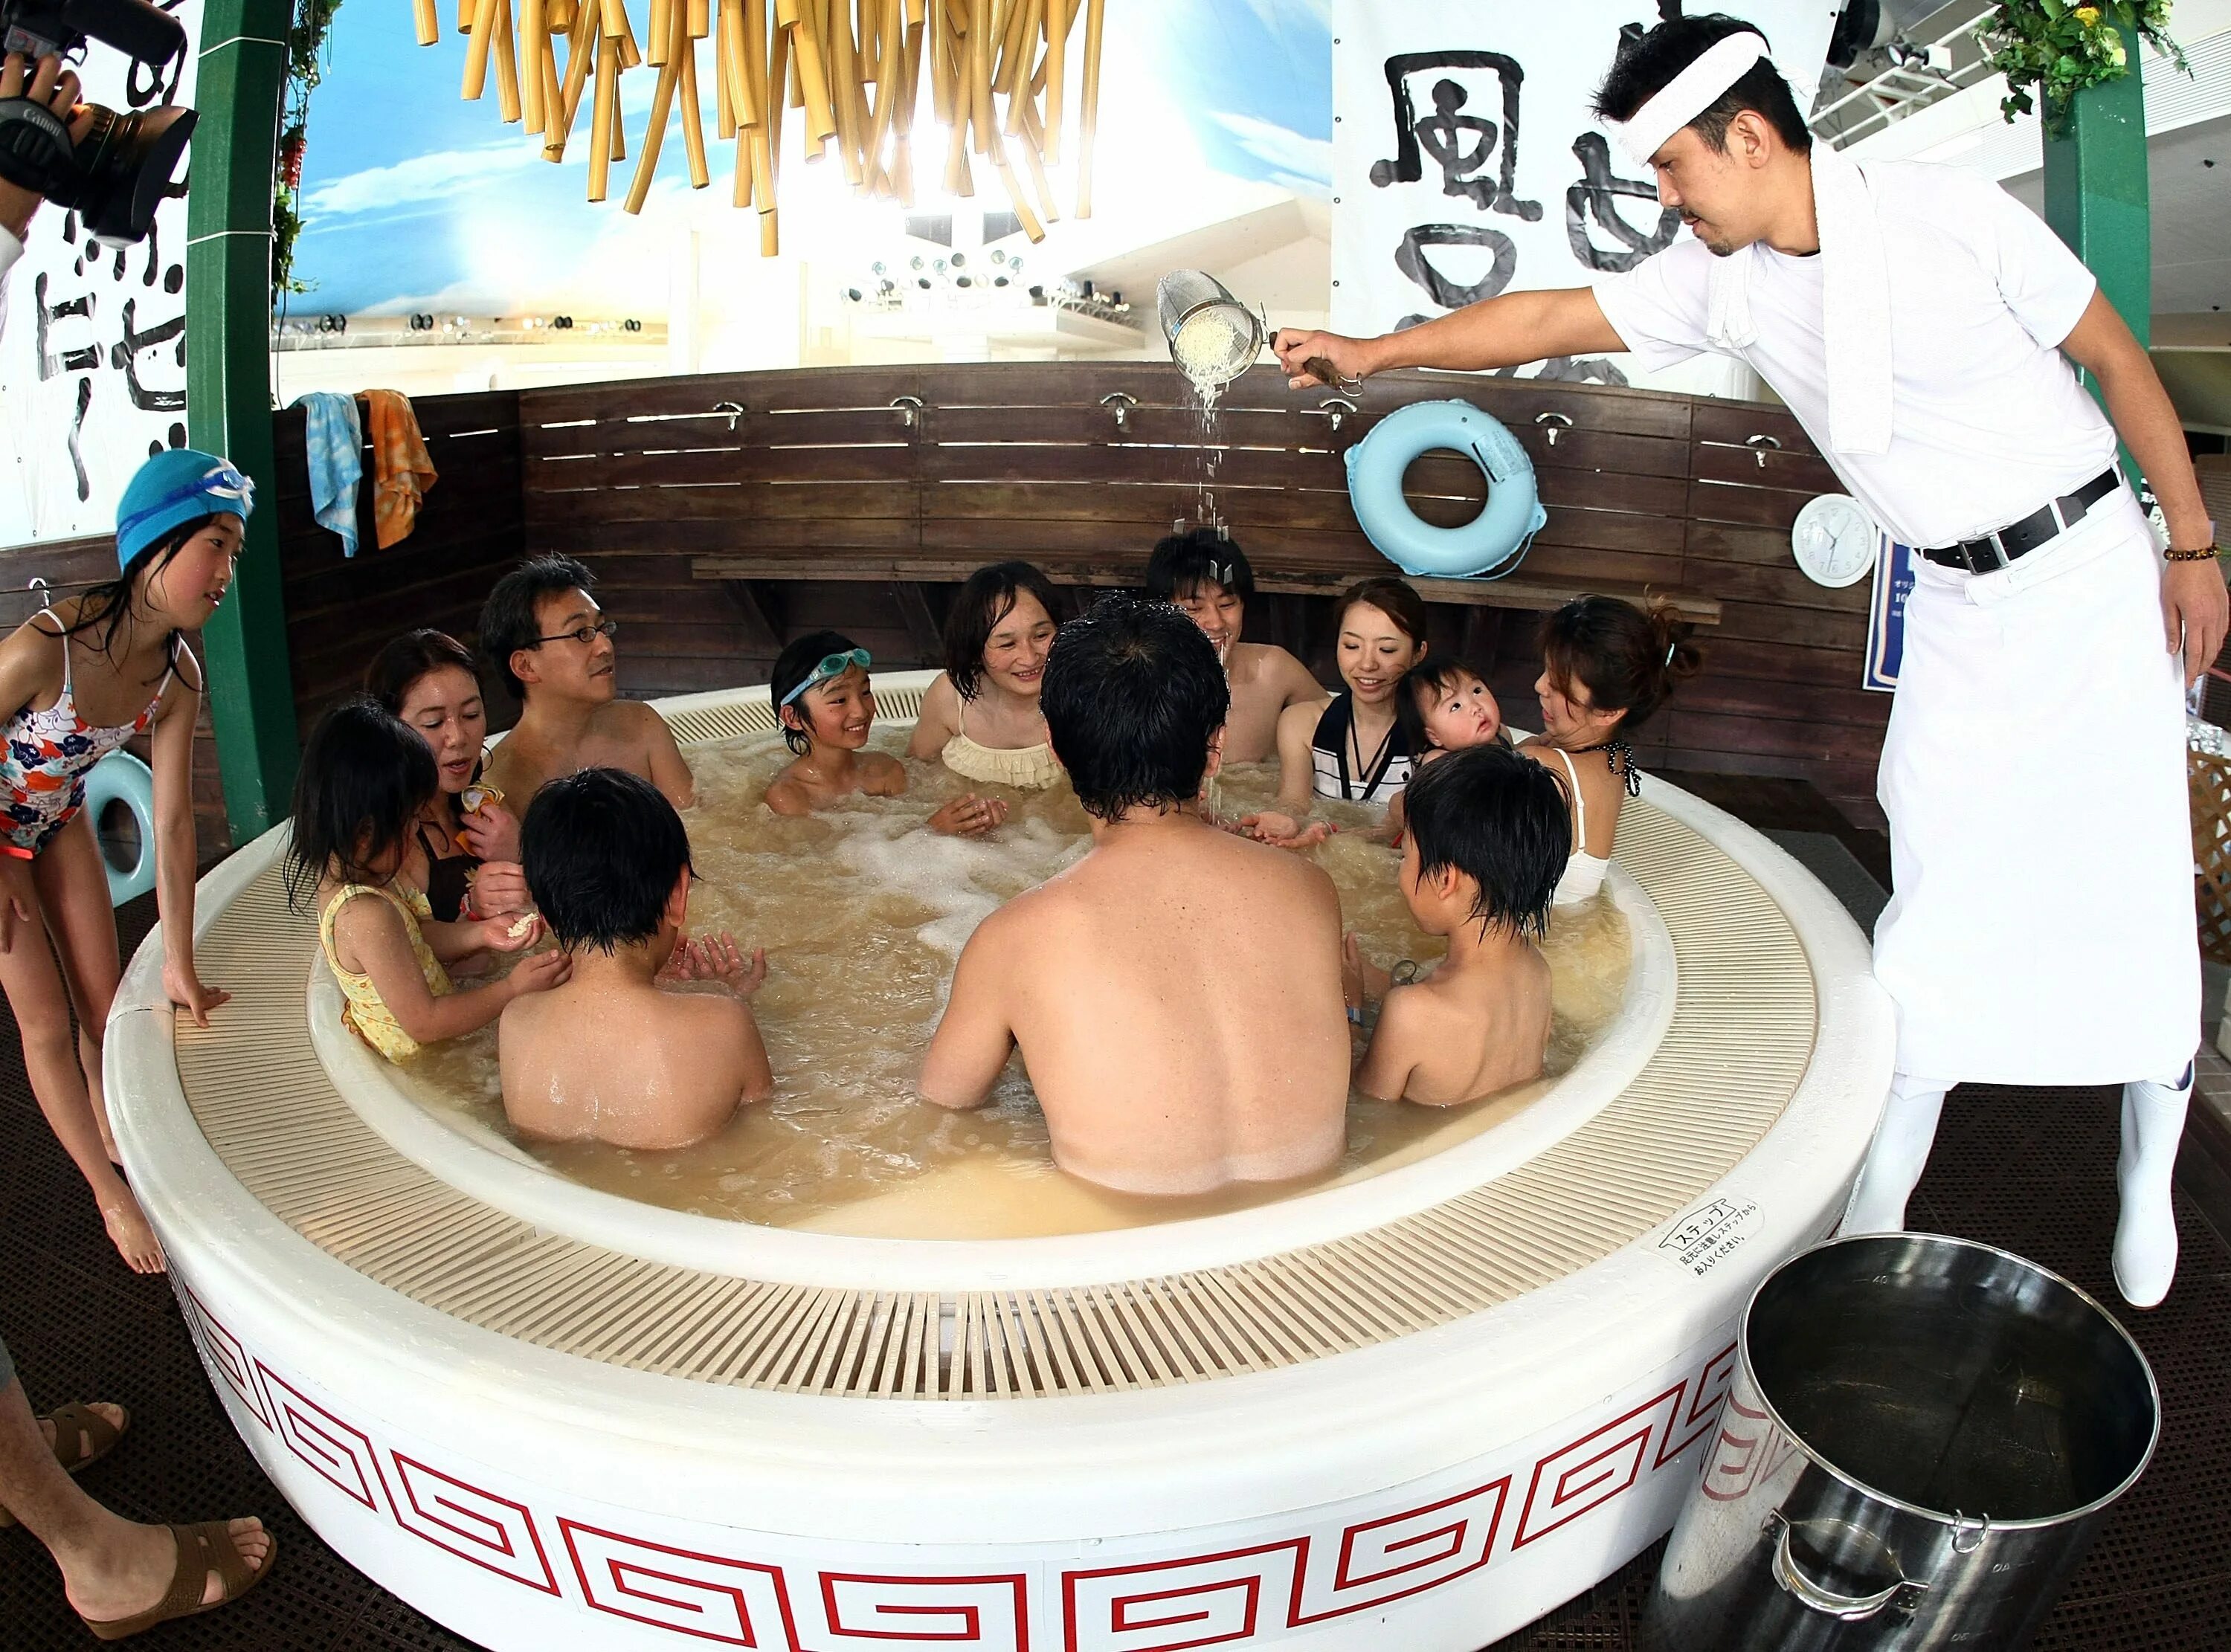 Японка купается. Японская смешанная баня сэнто. Общественная японская баня сэнто. Сэнто баня в Японии. Сэнто баня в Японии женская.